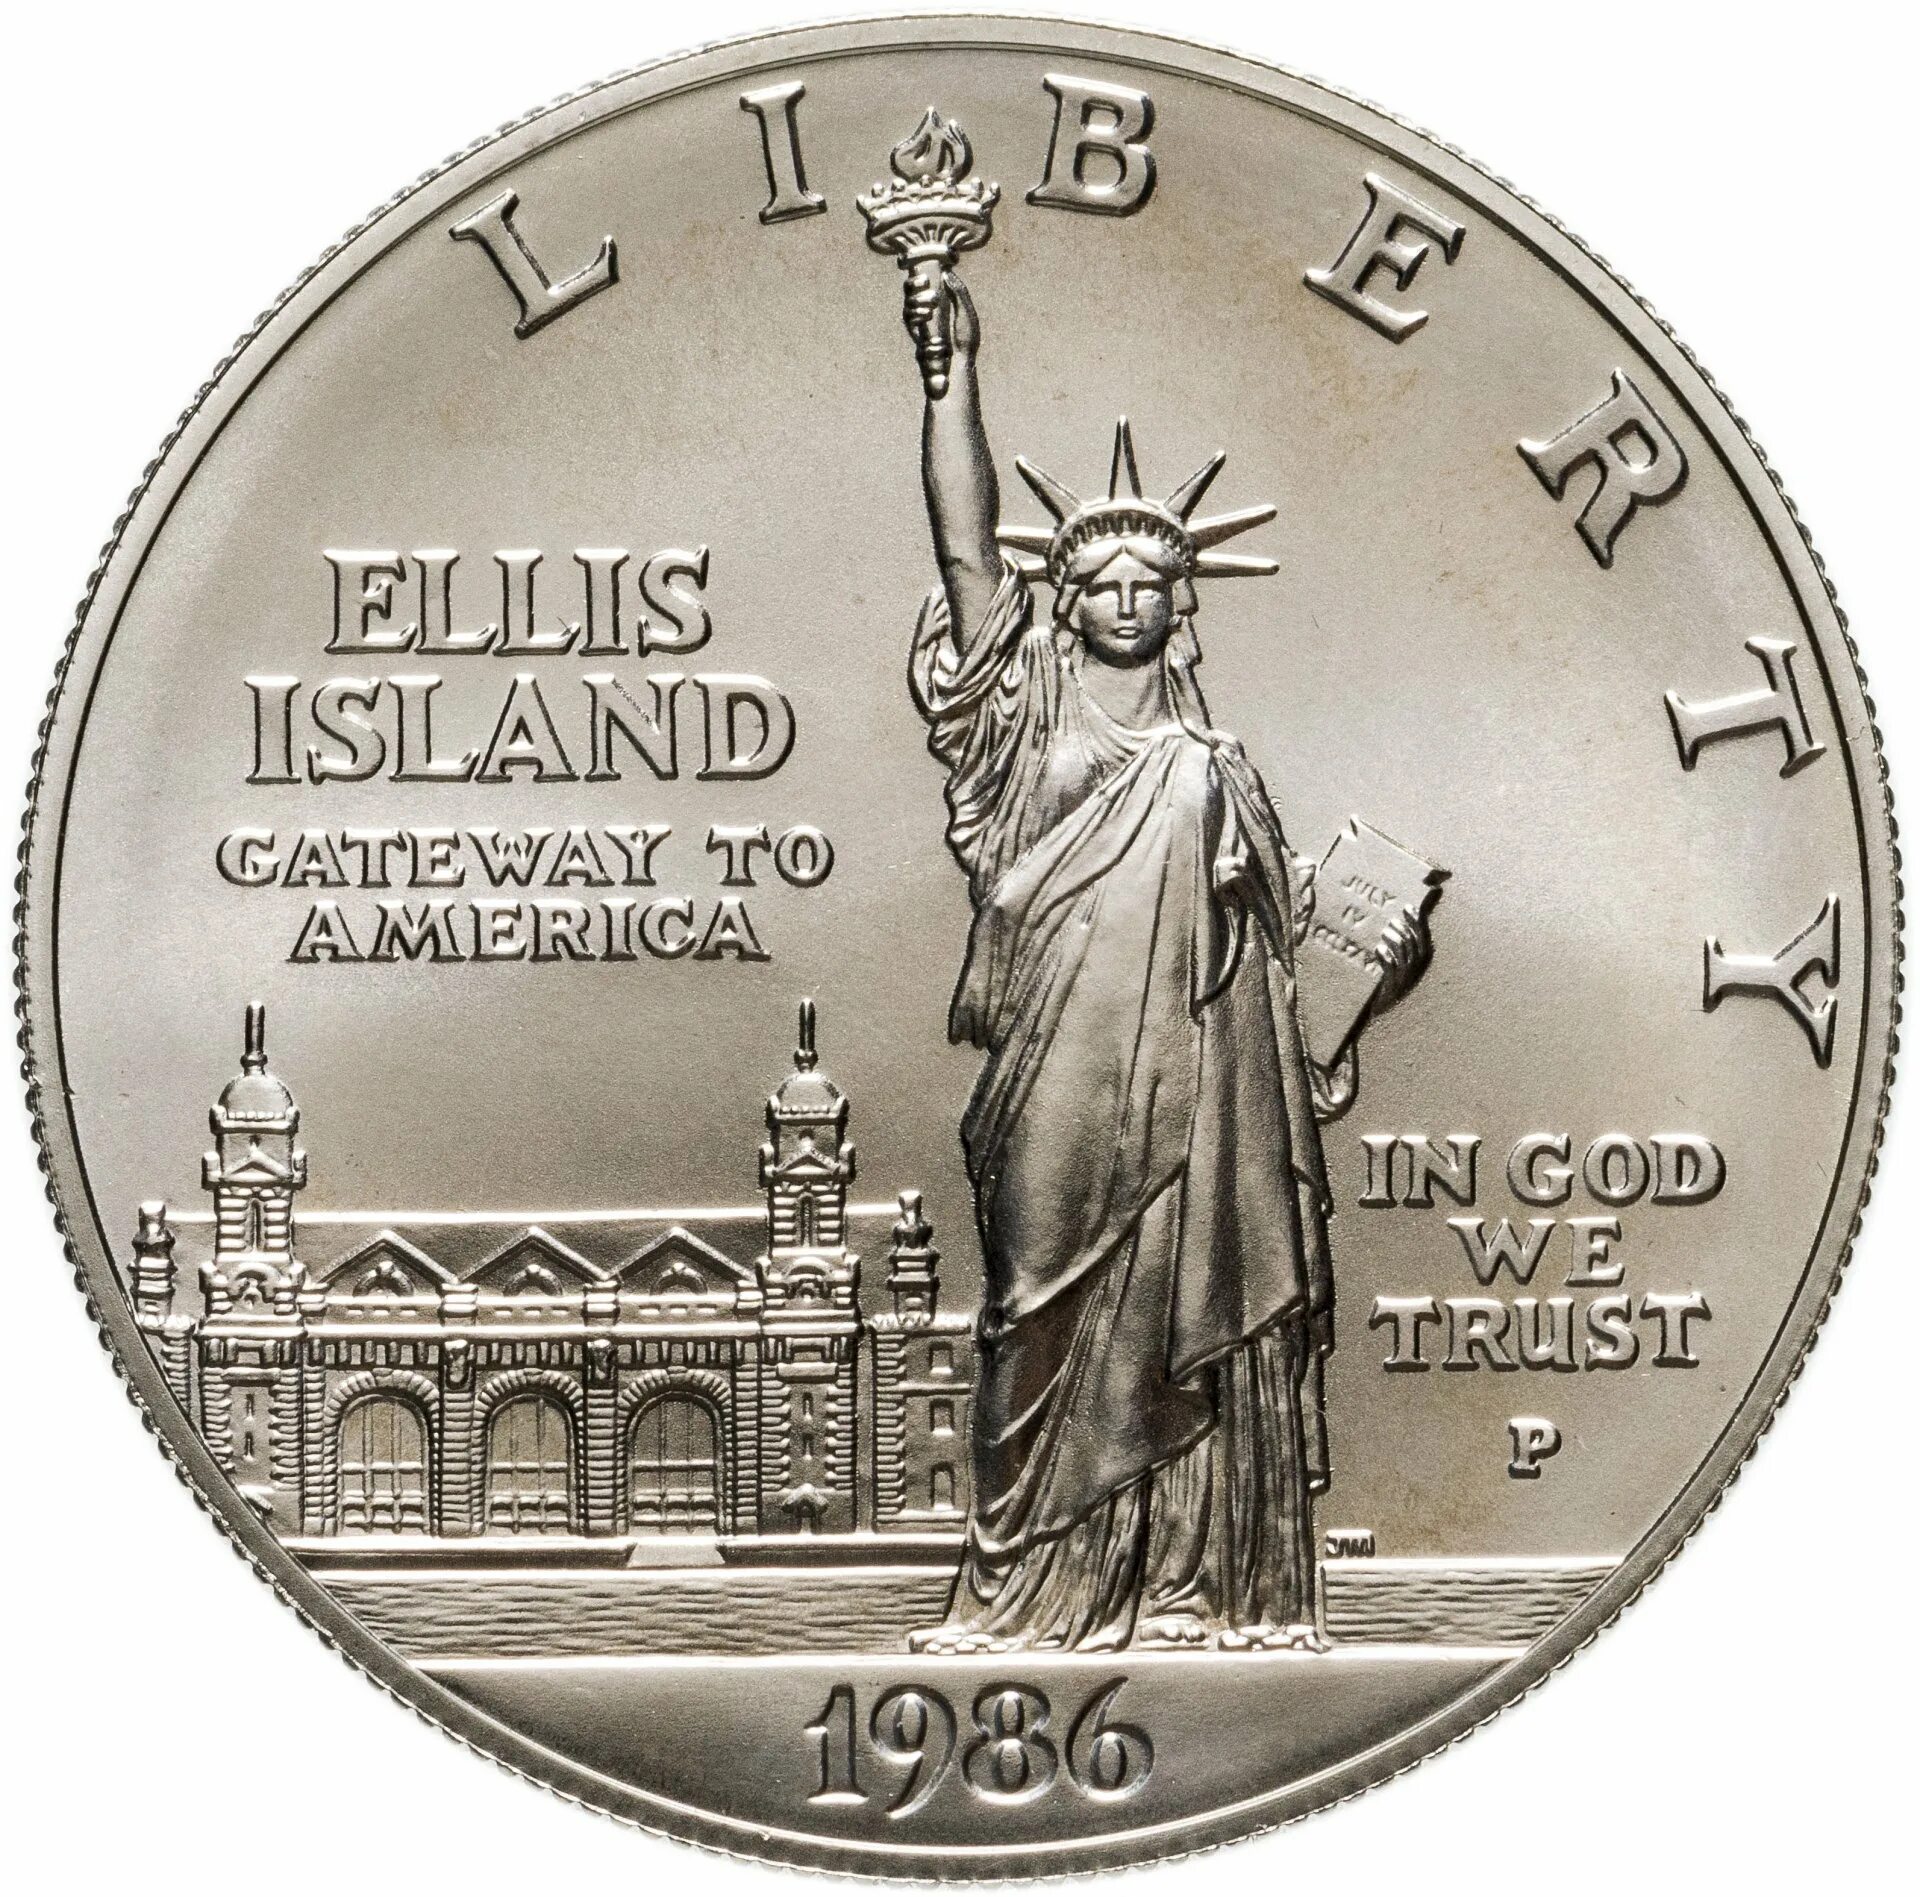 США, серебряная монета 1 доллар, 100 лет статуе свободы, 1986 года. США 1 доллар 1986 статуя. 1 Доллар Ellis Island 1986 год. 1 Доллар 1986 США монета. 1 доллар против